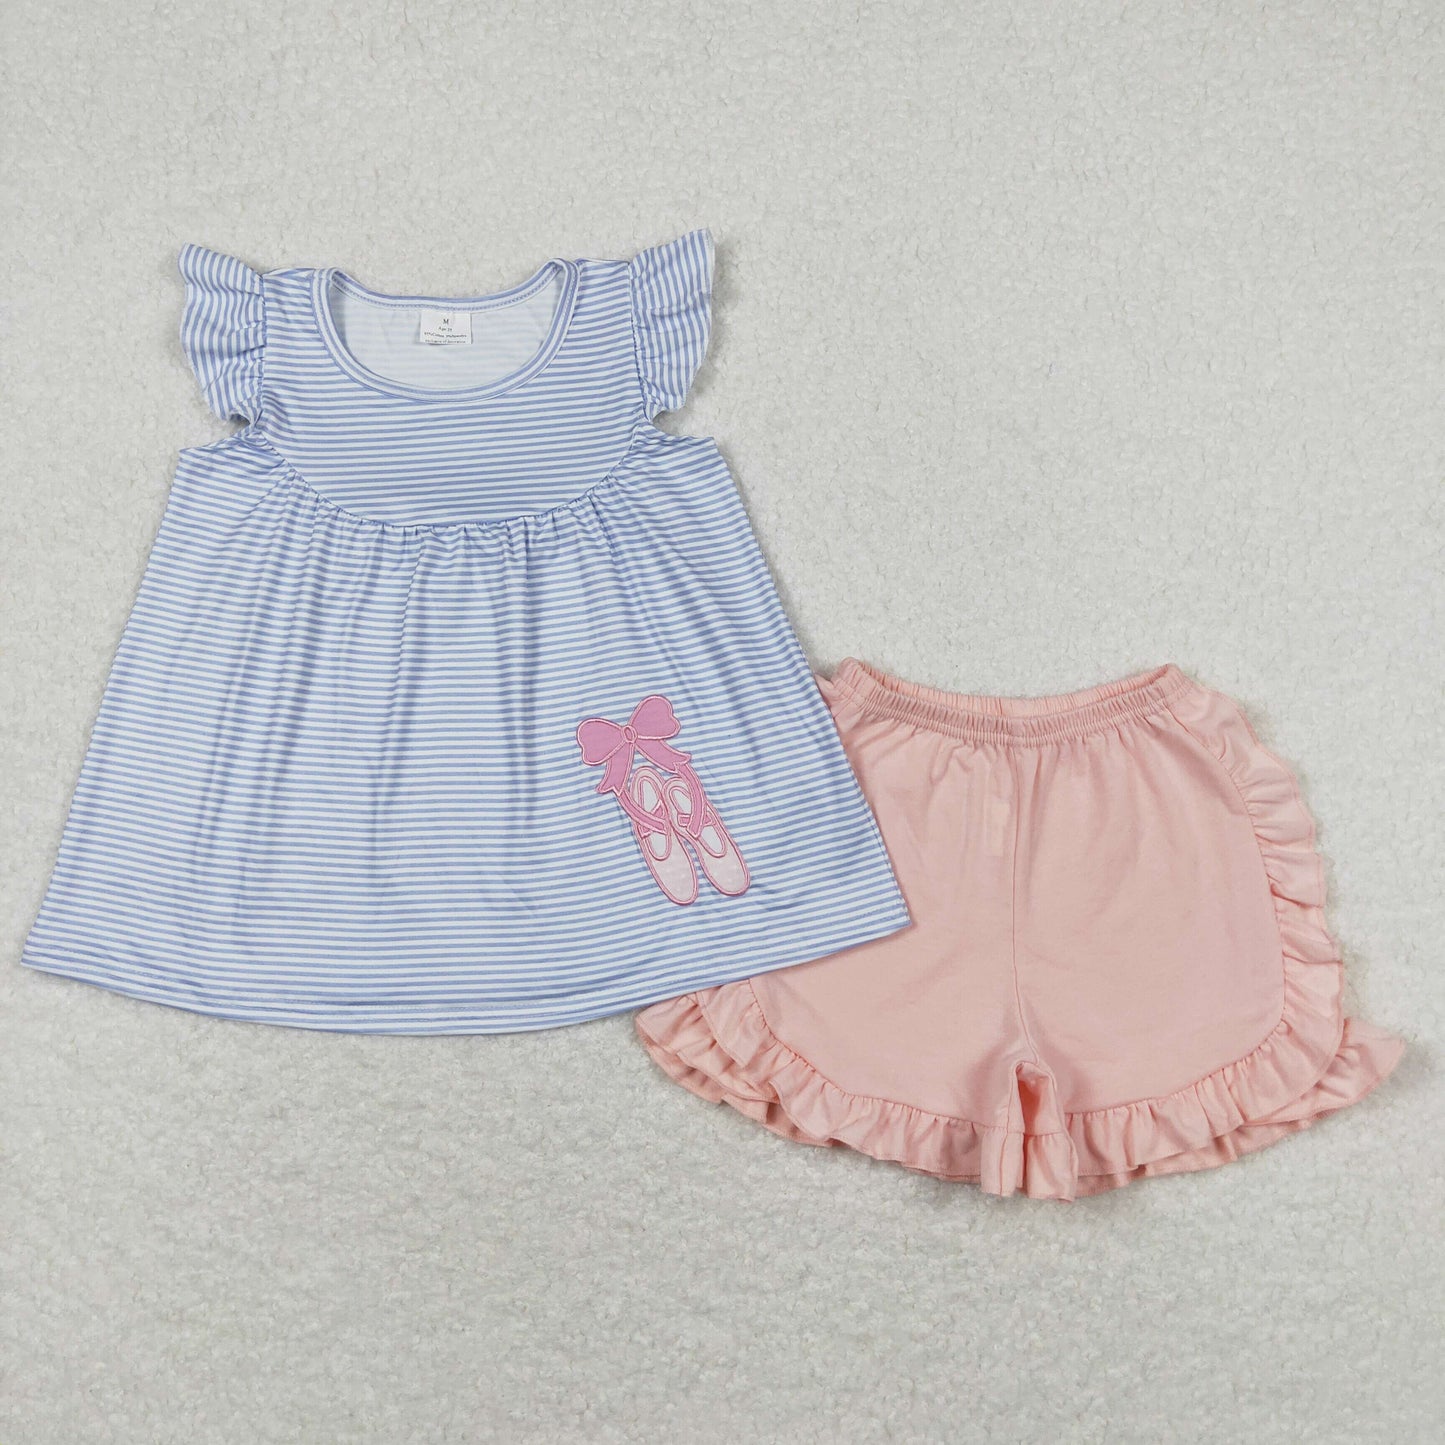 ballet embroidery ruffle shorts set toddler girls clothing